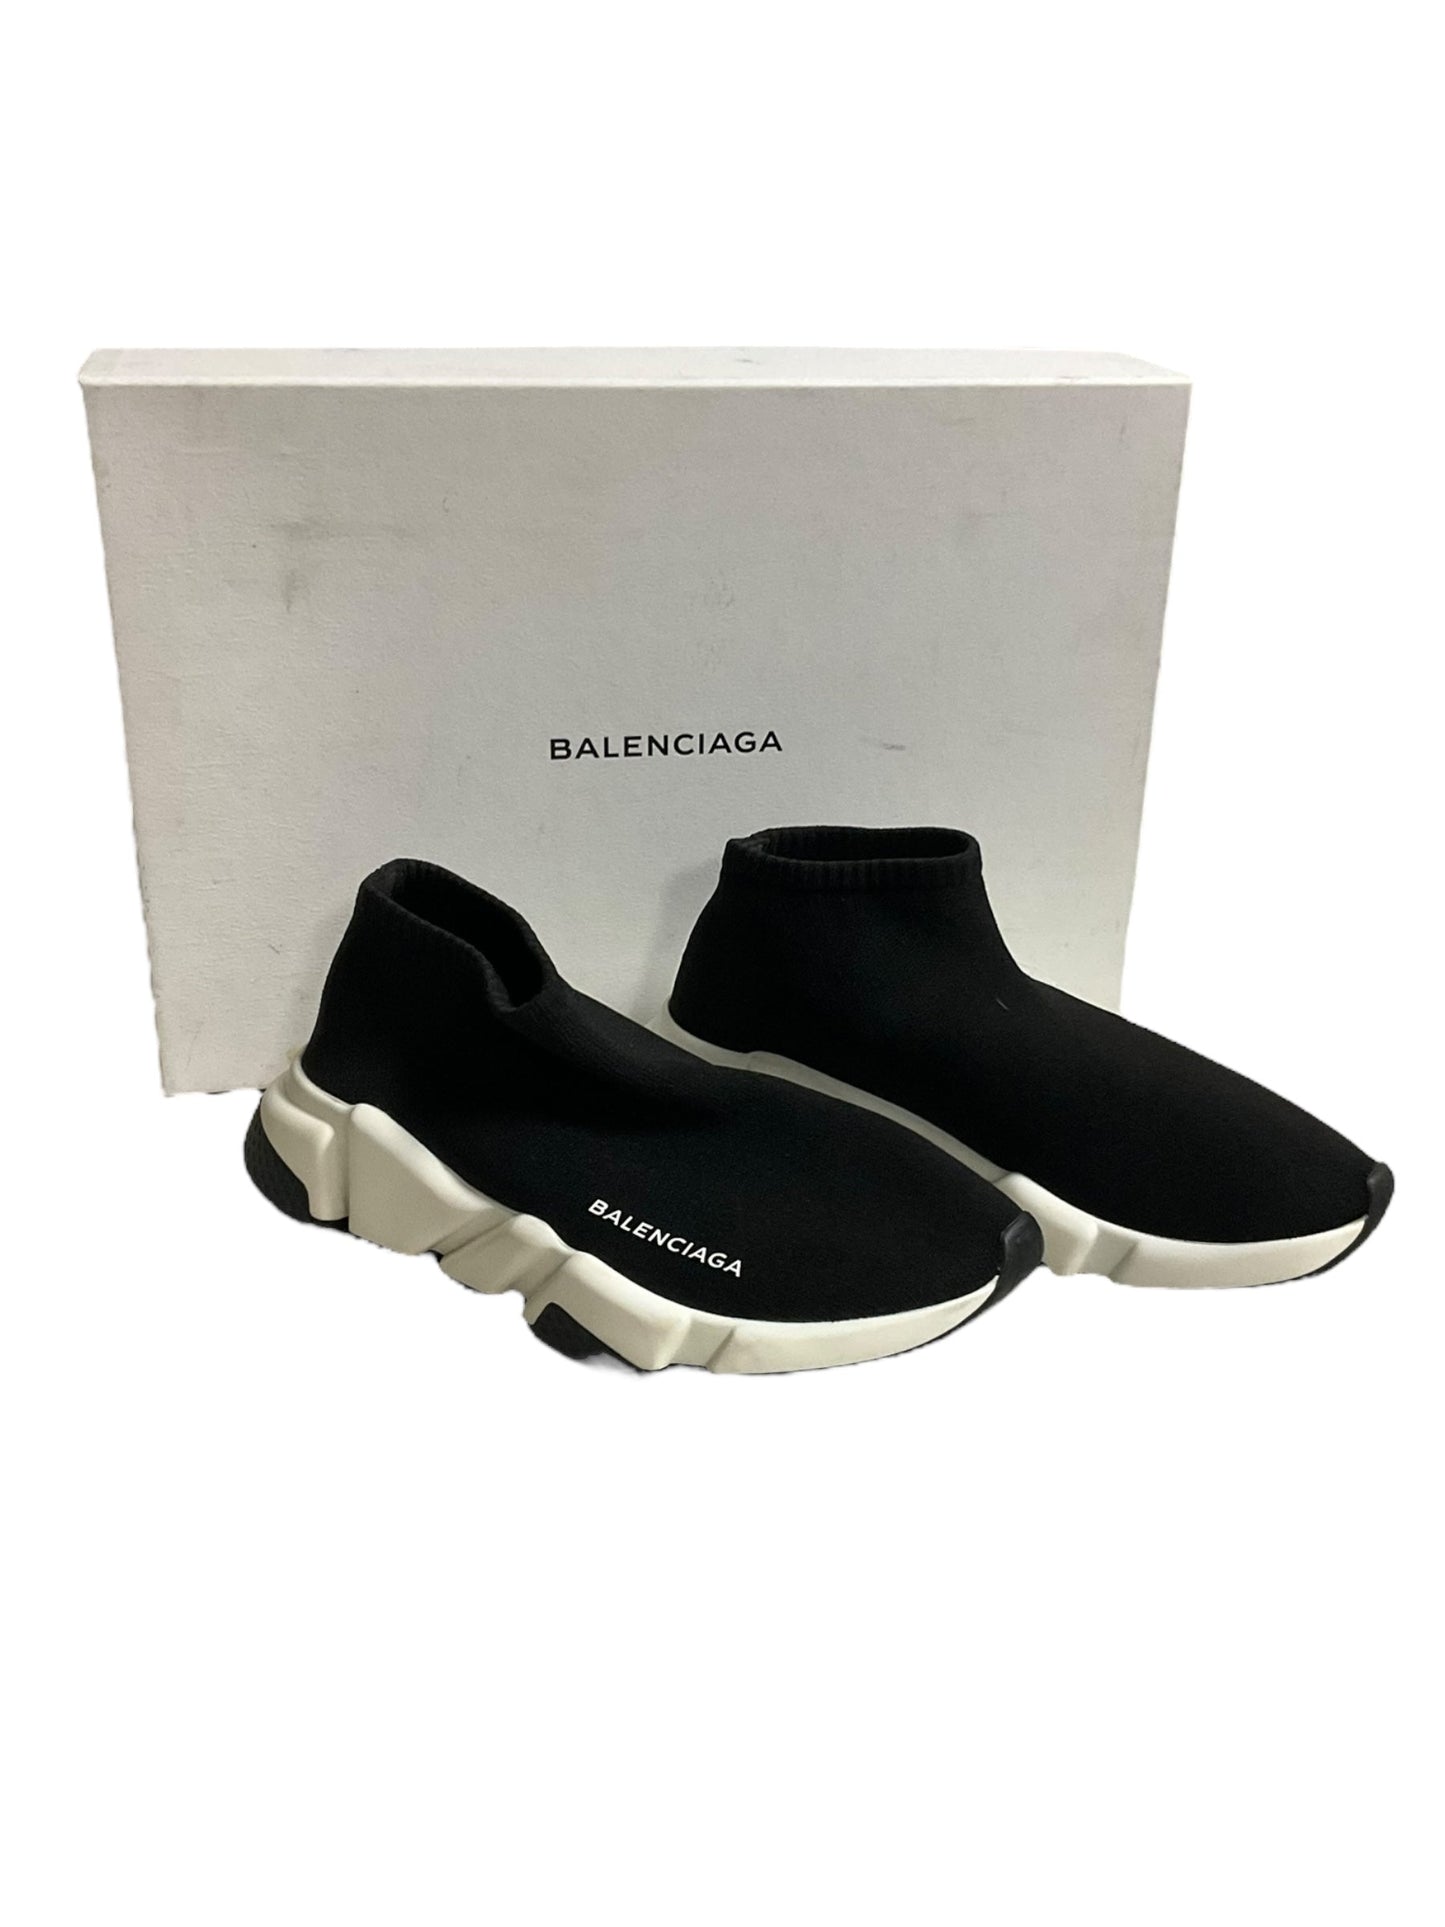 Black & White Shoes Luxury Designer Balenciaga, Size 8